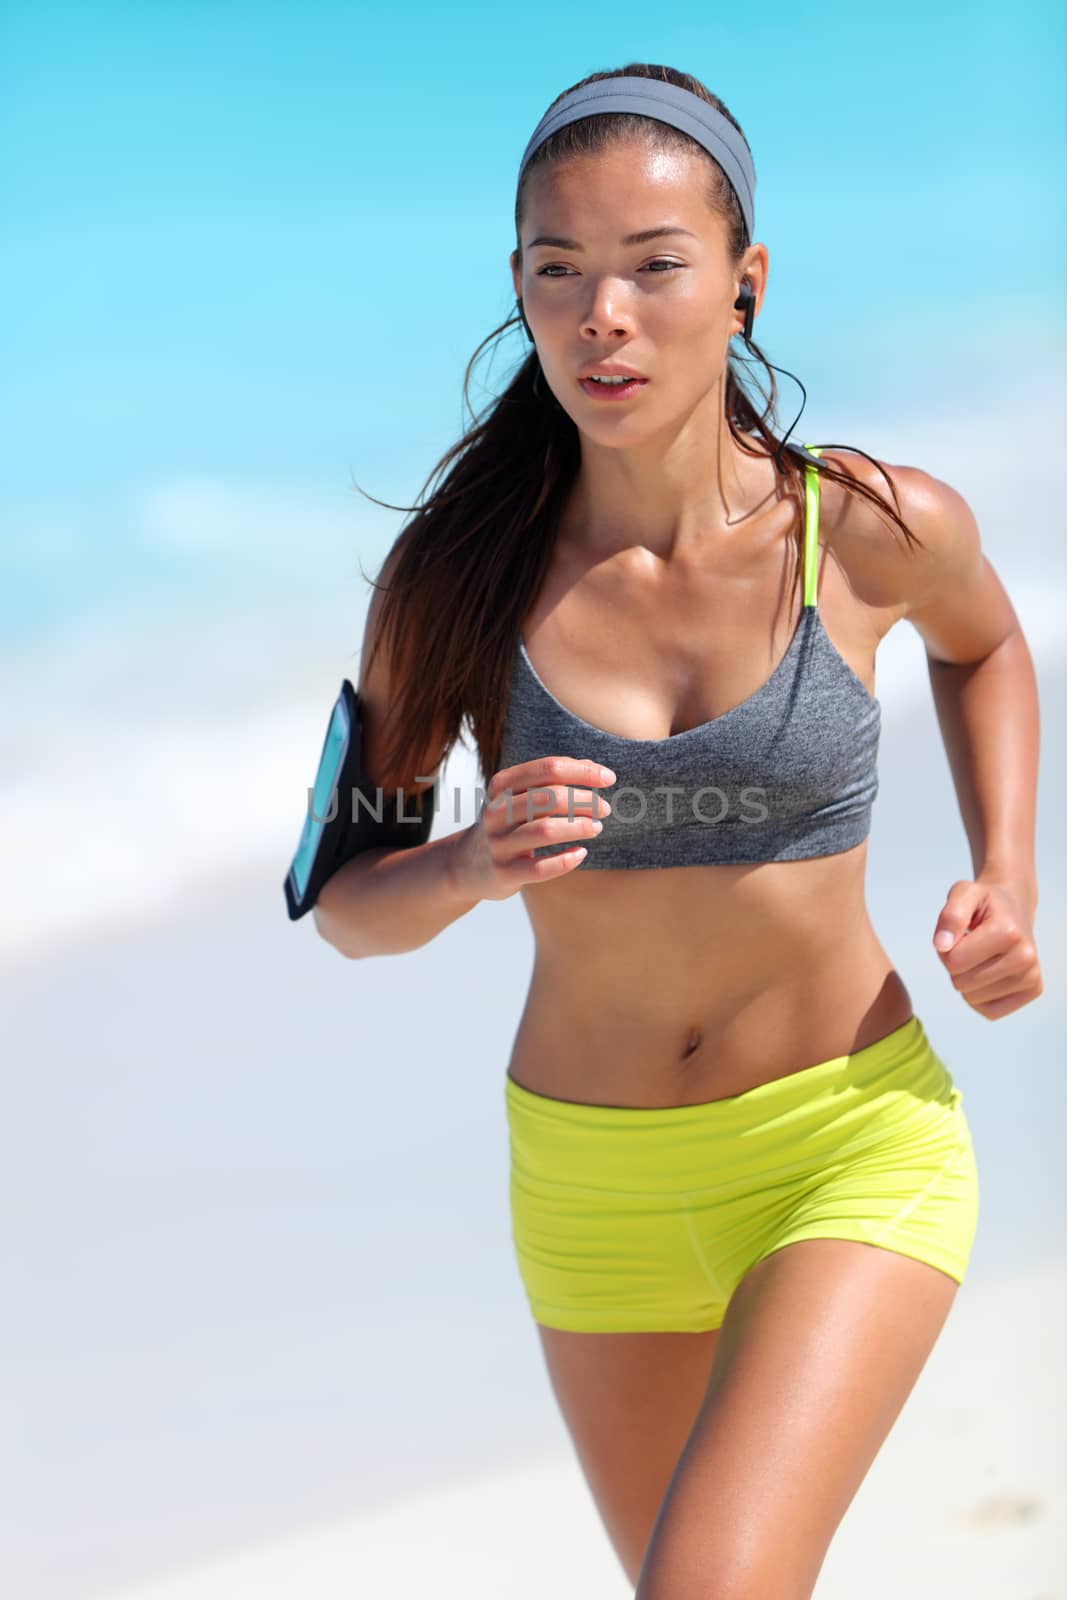 Running runner jogging training cardio on beach in sportswear by Maridav